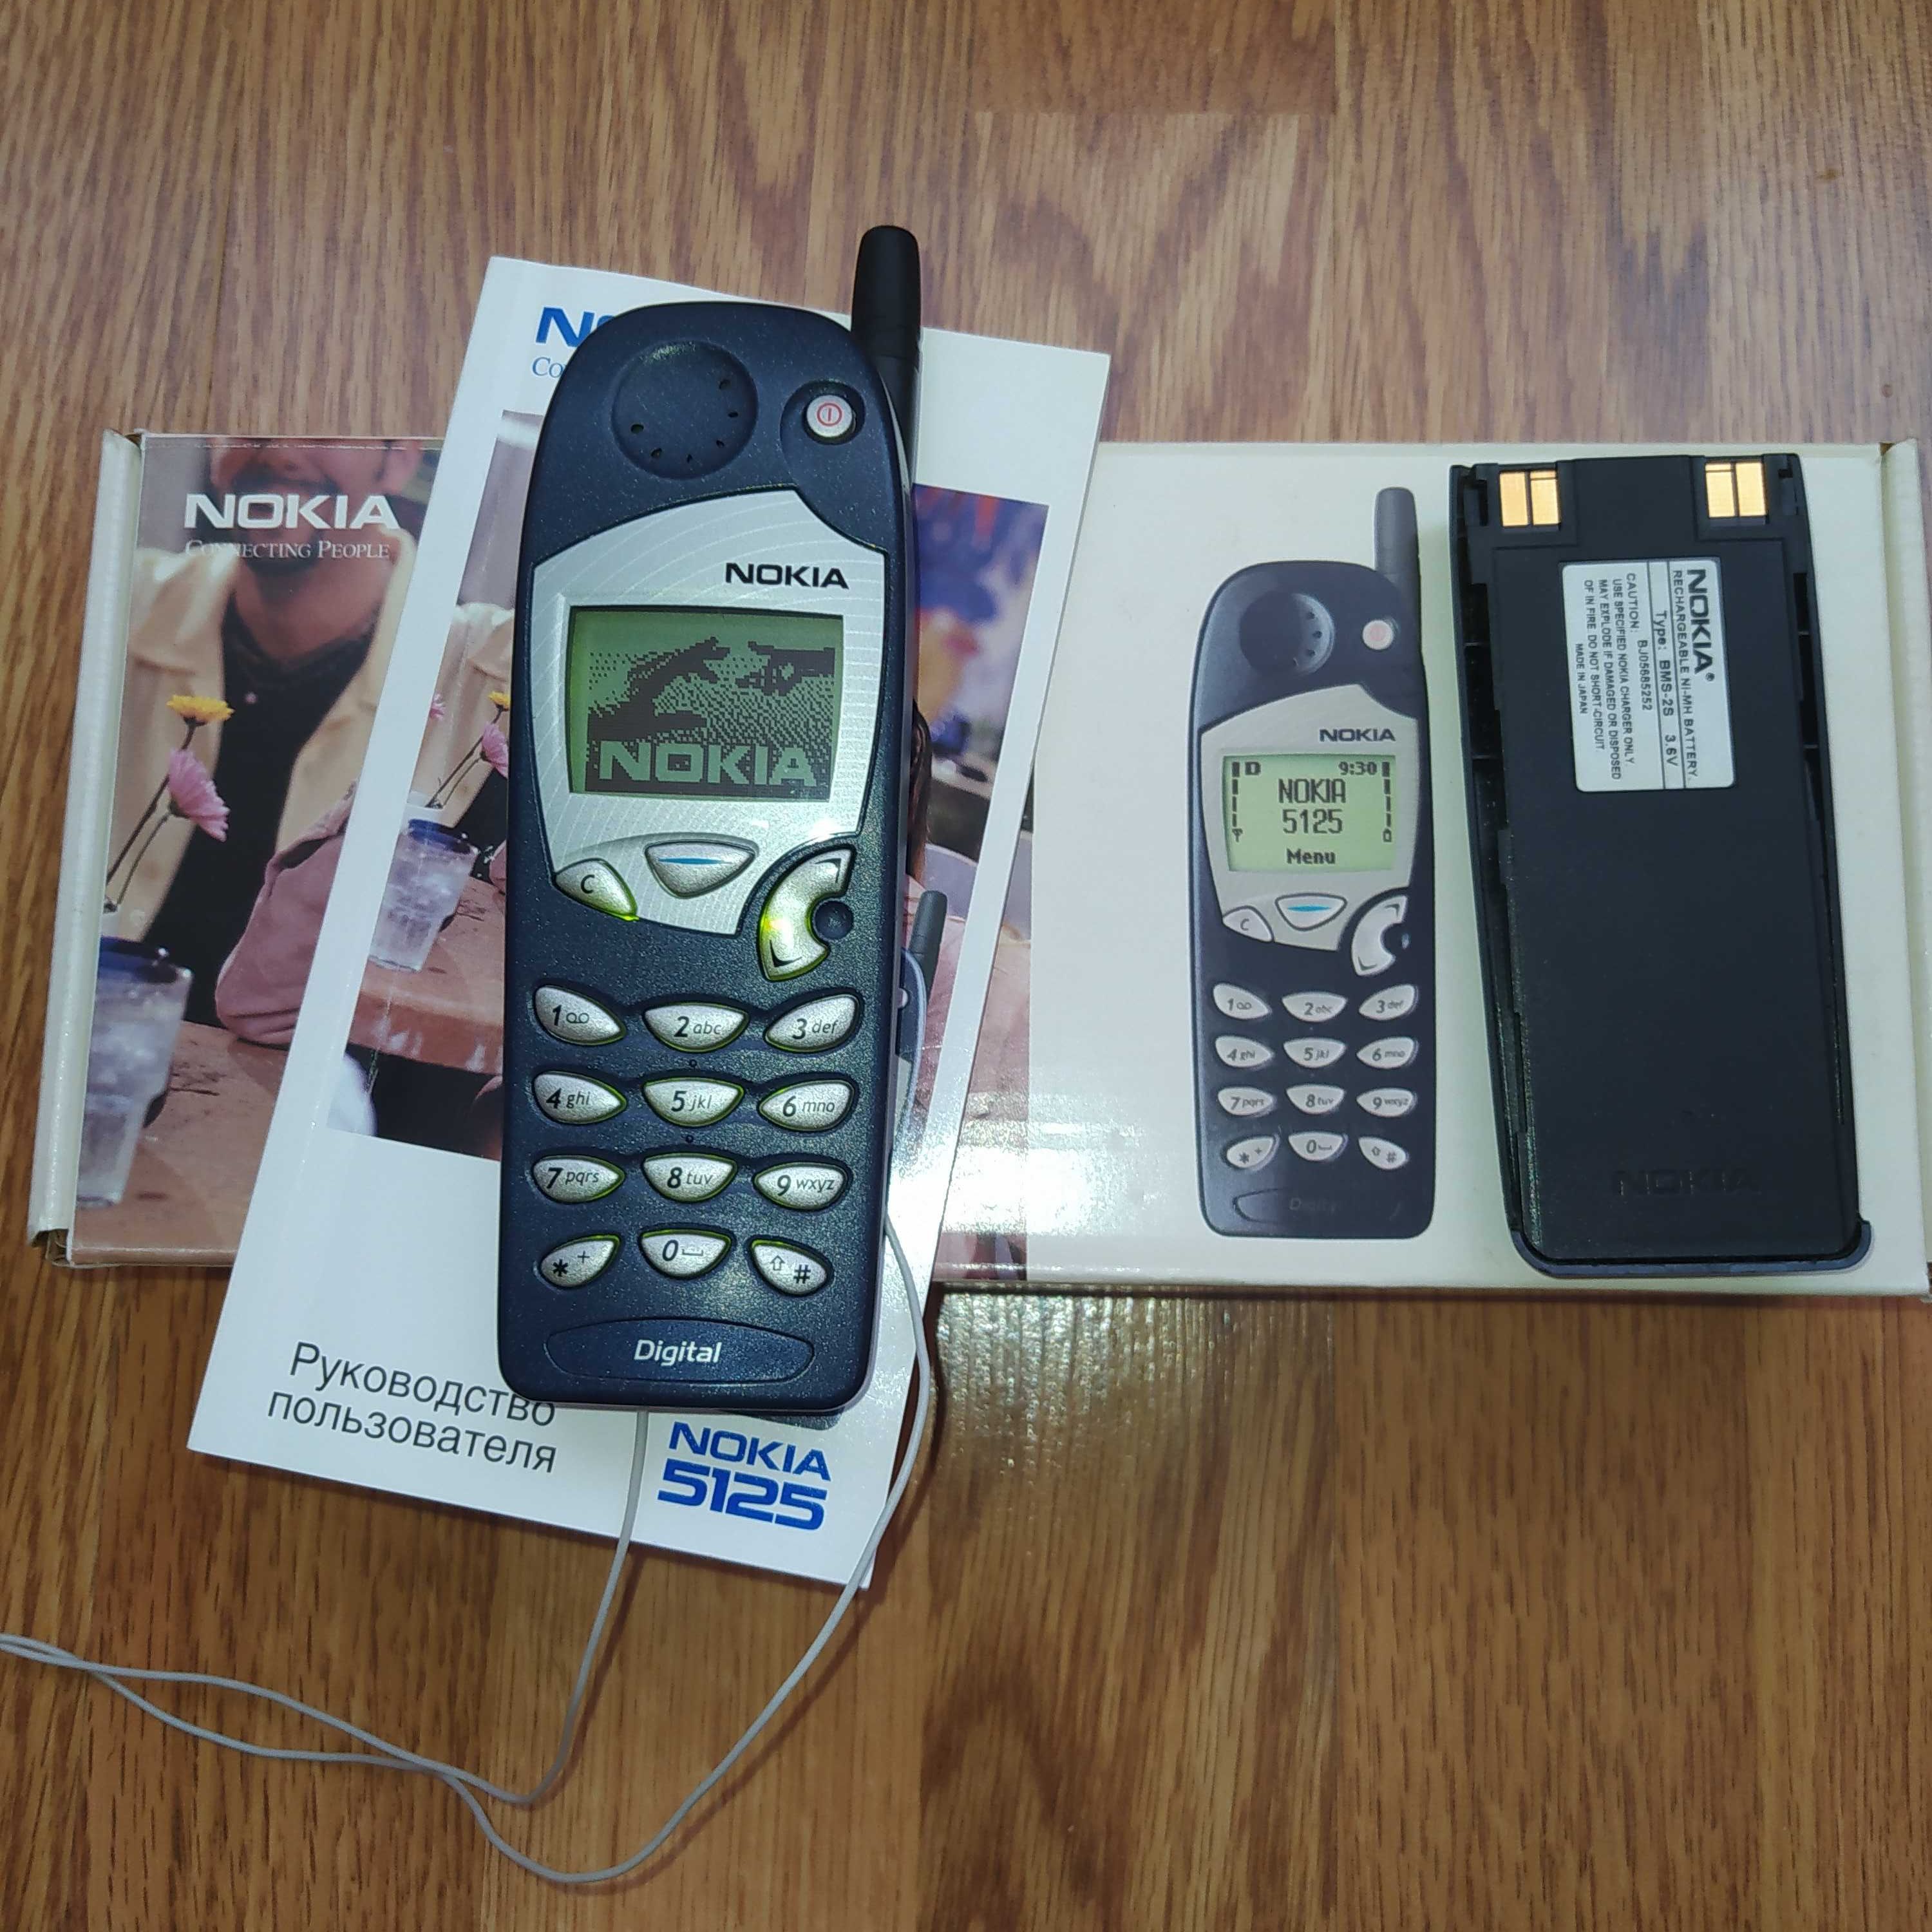 Nokia 5125 телефон нокия 5125